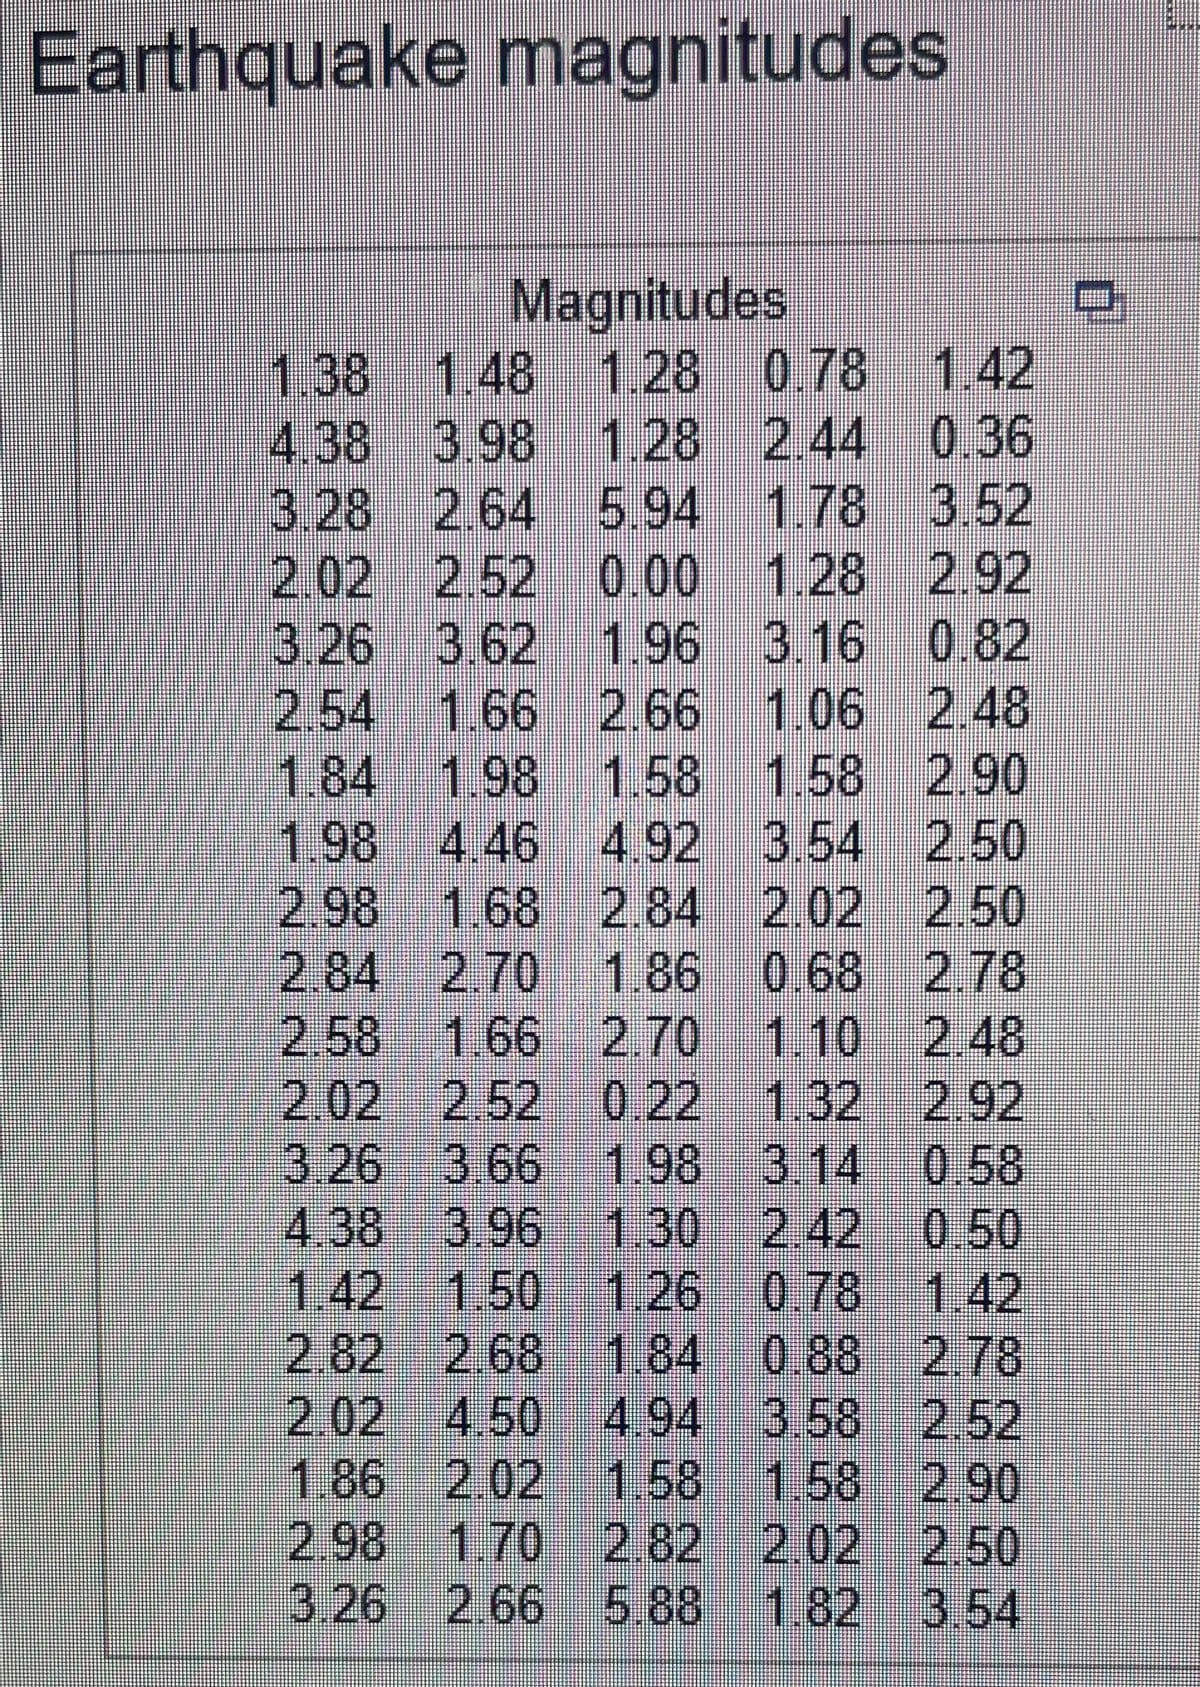 Earthquake magnitudes
Magnitudes
1.38 1.48 1.28 0.78 1.42
4.38 3.98 1.28 2.44 0.36
3.28 2.64 5.94 1.78 3.52
2.02 2.52 0.00 1.28 2.92
3.26 3.62 1.96 3.16 0.82
2.54 1.66 2.66 1.06 2.48
1.841.98 1.58 1.58 2.90
1.98 4.46 4.92 3.54 2.50
2.98 1.68 2.84 2.02 2.50
2.84 2.70 1.86 0 68 2.78
1.10 2.48
1.32 2.92
3.14 0.58
4,38 3.96 -1,30 2,42 0.50
1.42
2.82 2.68 1.84 0.88 2.78
2.02 4.50 4.94 3.58 2.52
1.58 2.90
2.50
3.54
2.58 1.66 2.70
2.02 2.52 0.22
3.26 366 1.98
1.42 1.50
1.26 0.78
186 2.02 1.58
2.98 1.70 2.82 2.02
3.26 2.66 5.88 1.82
